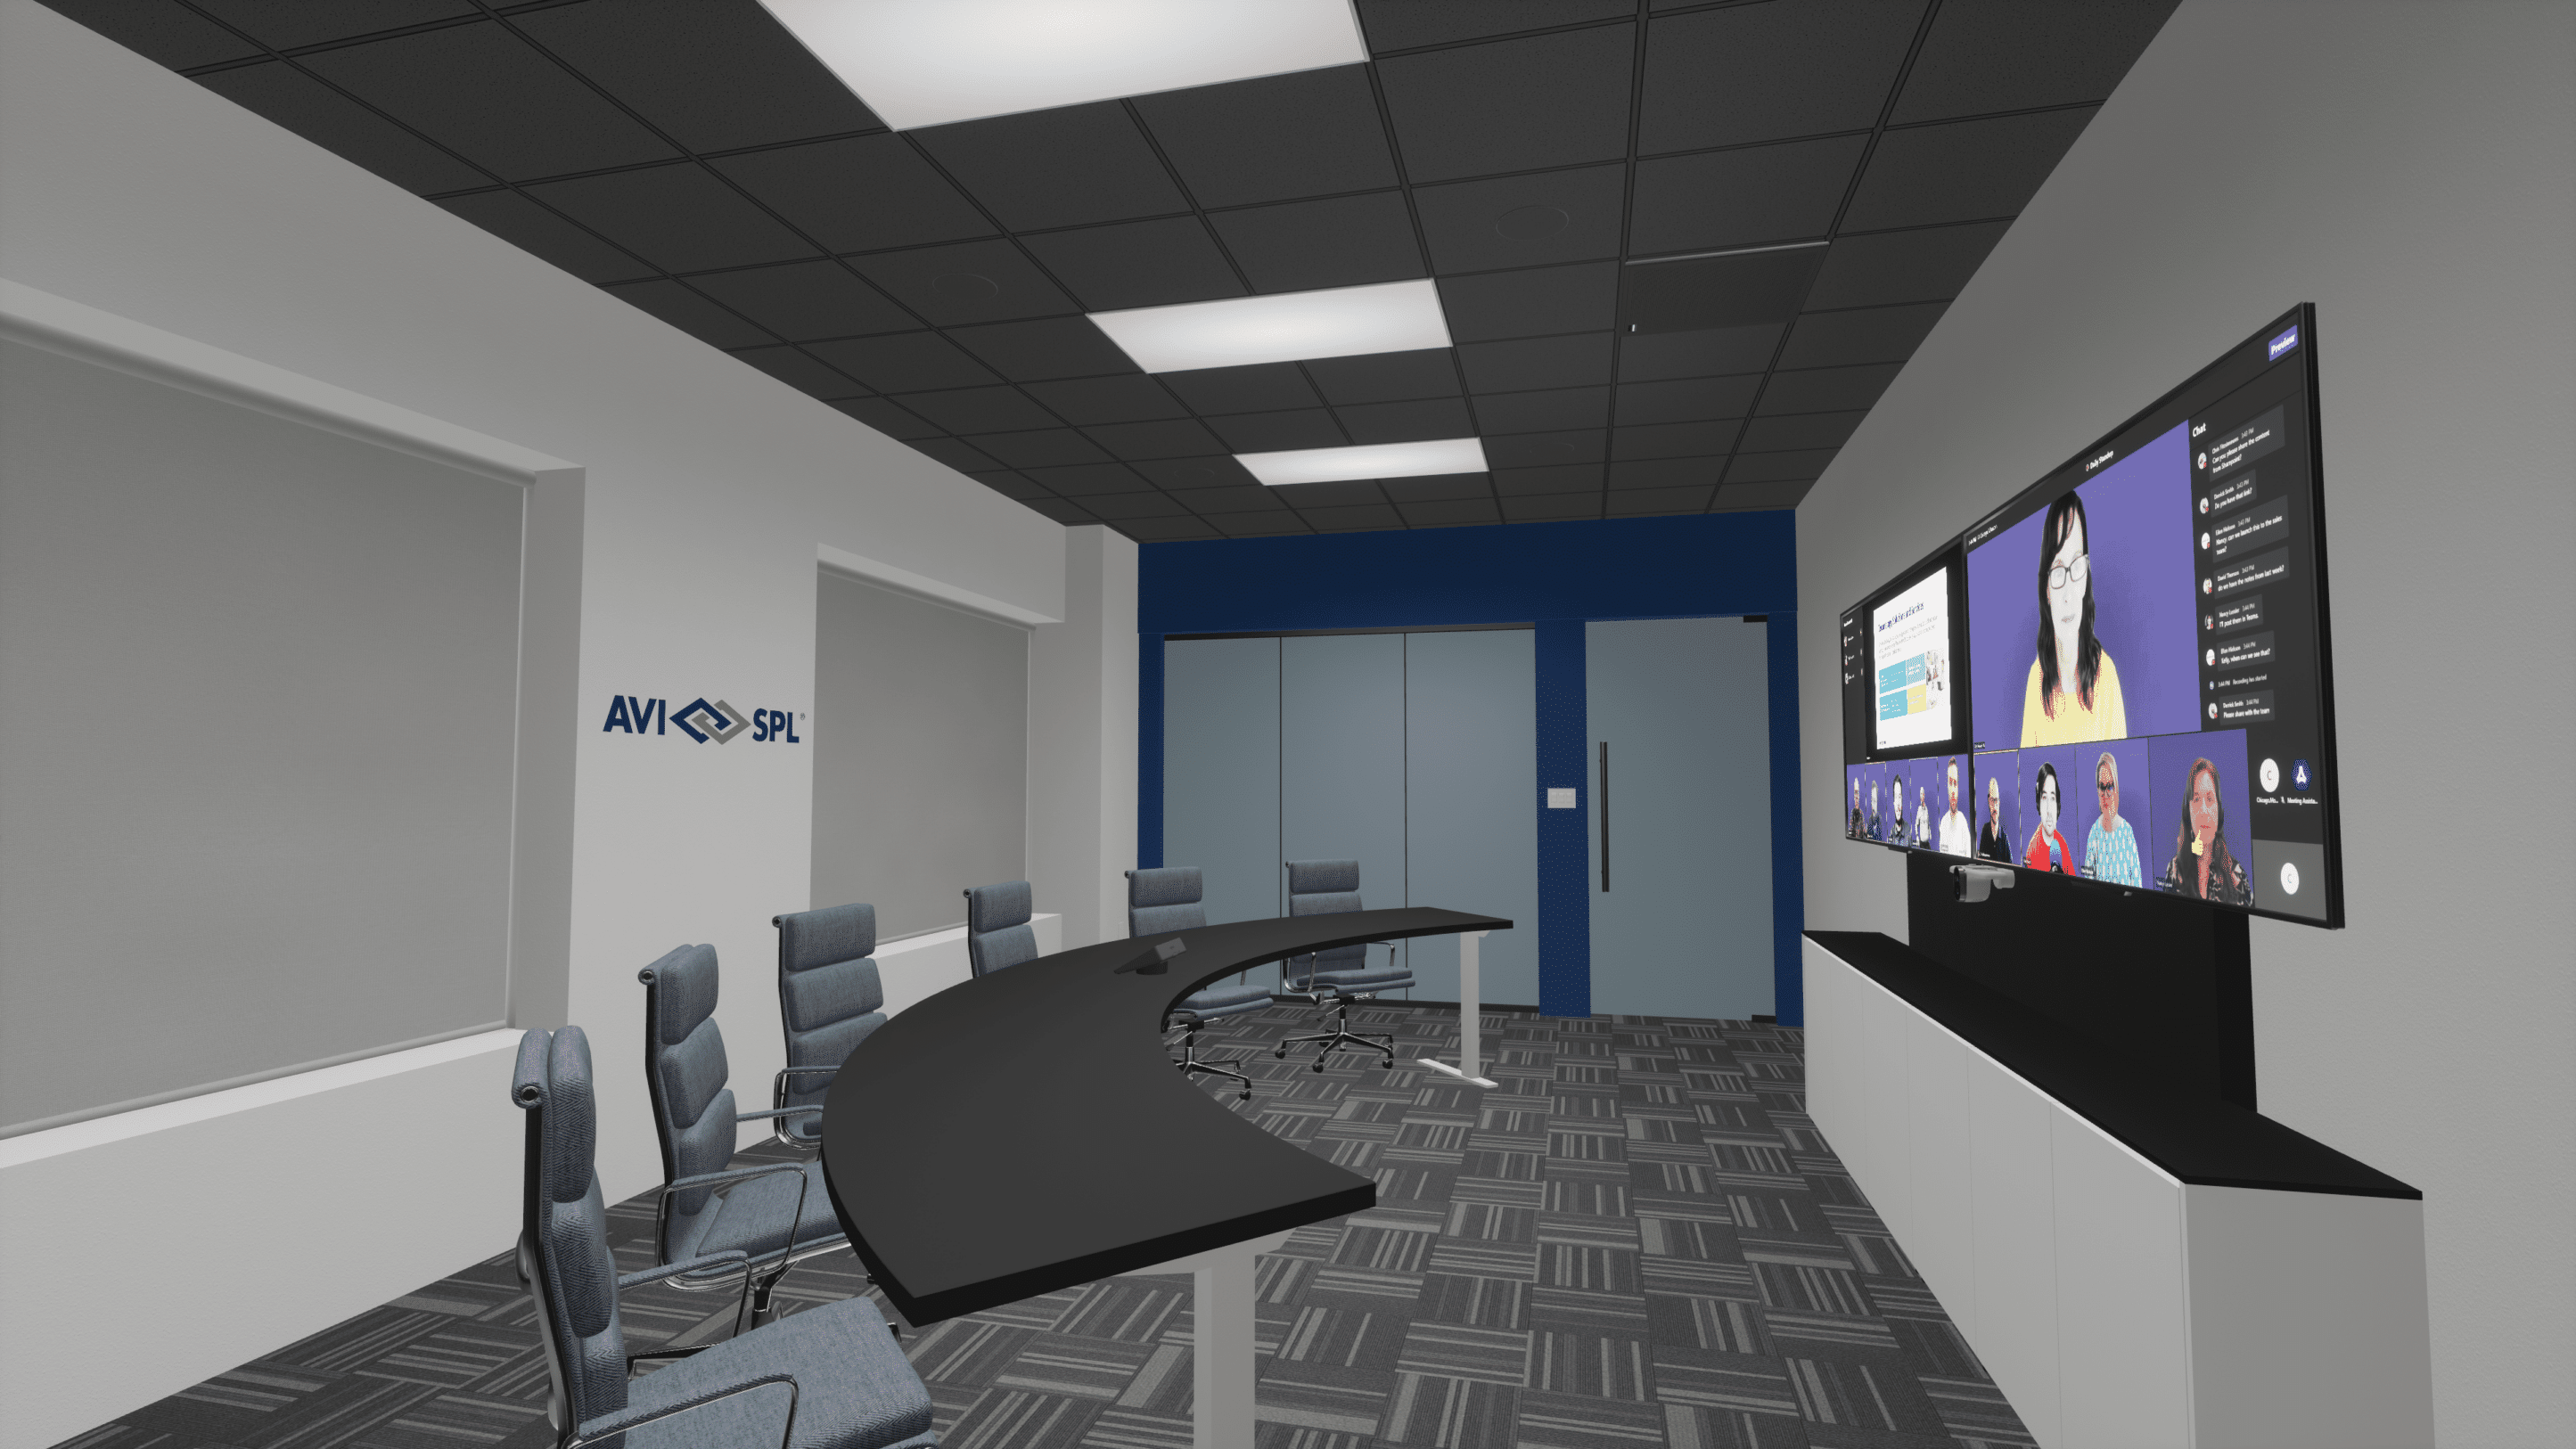 VR reference designs large conference room